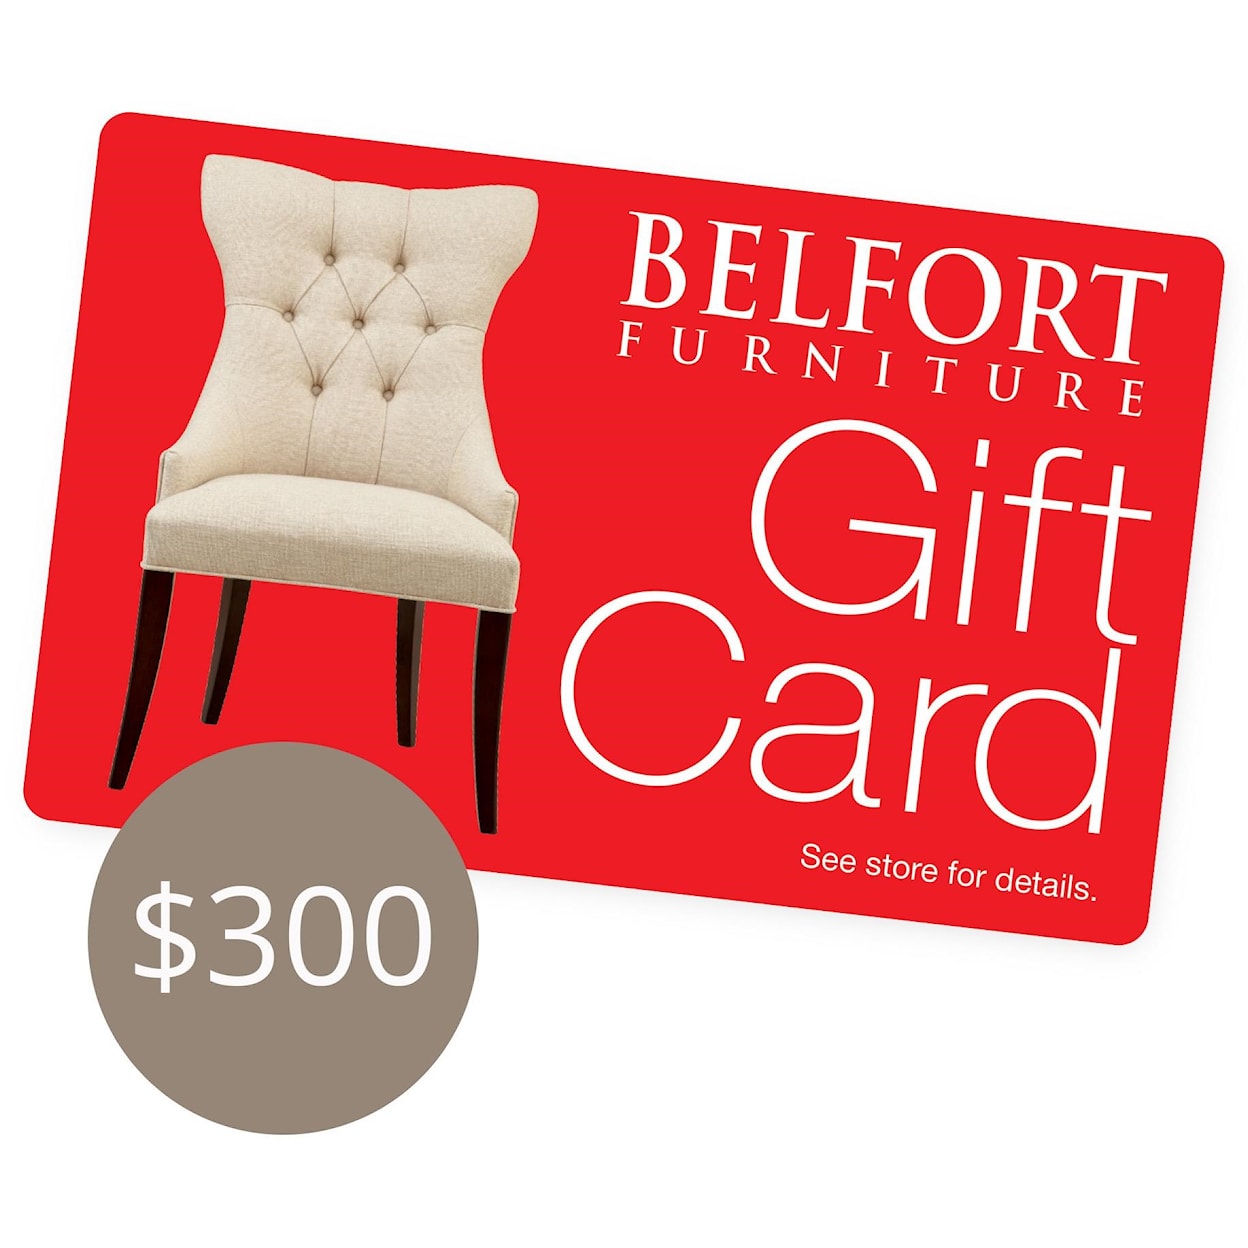 Belfort Furniture Gift Cards $300 Belfort Gift Card